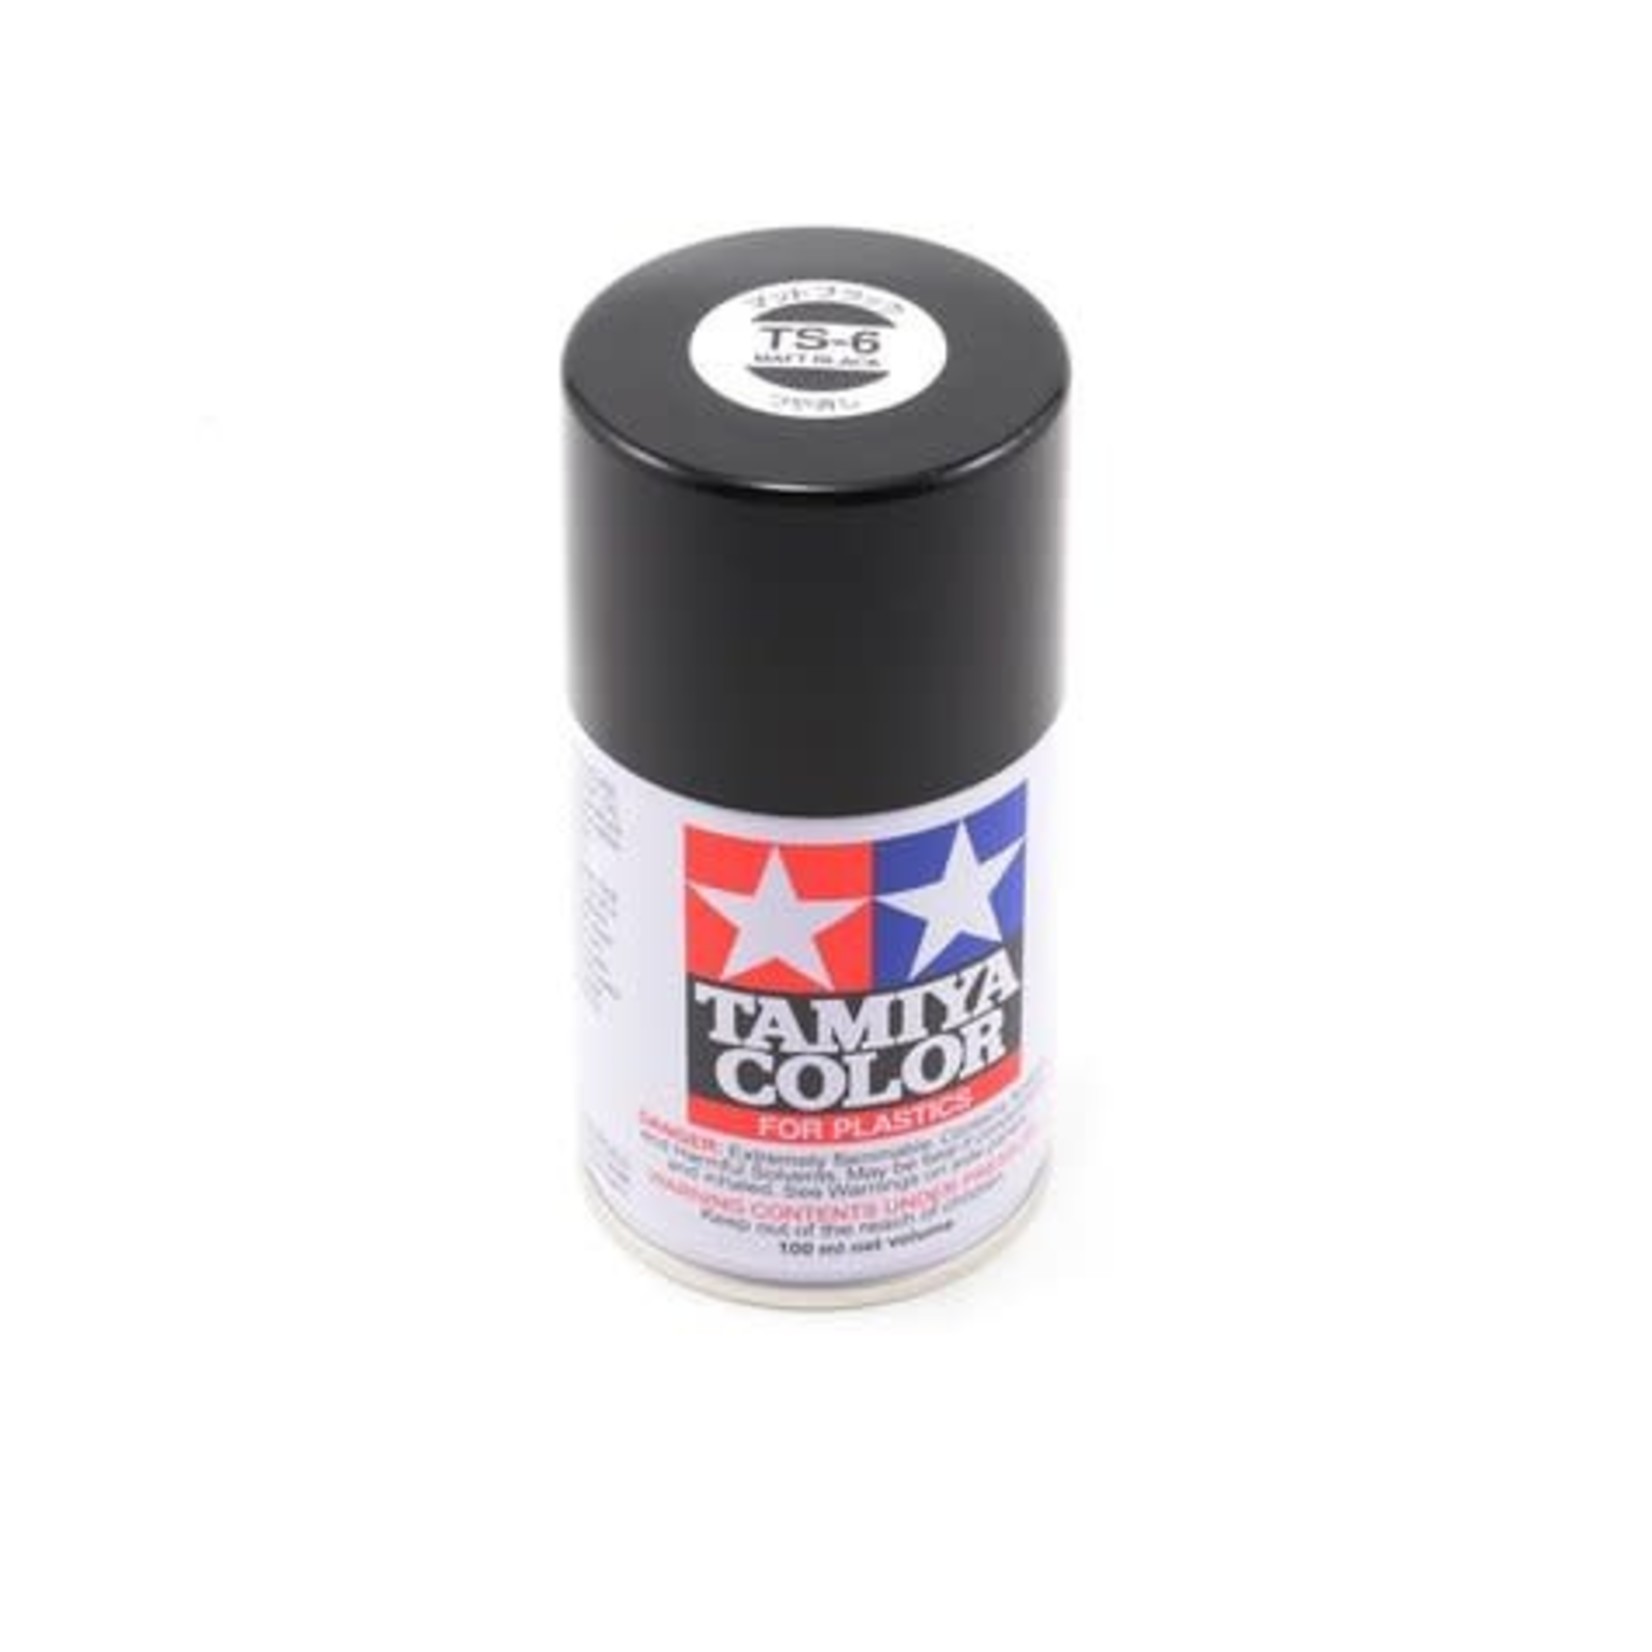 Tamiya Tamiya TS-6 Matte Black Lacquer Spray Paint (100ml) #85006